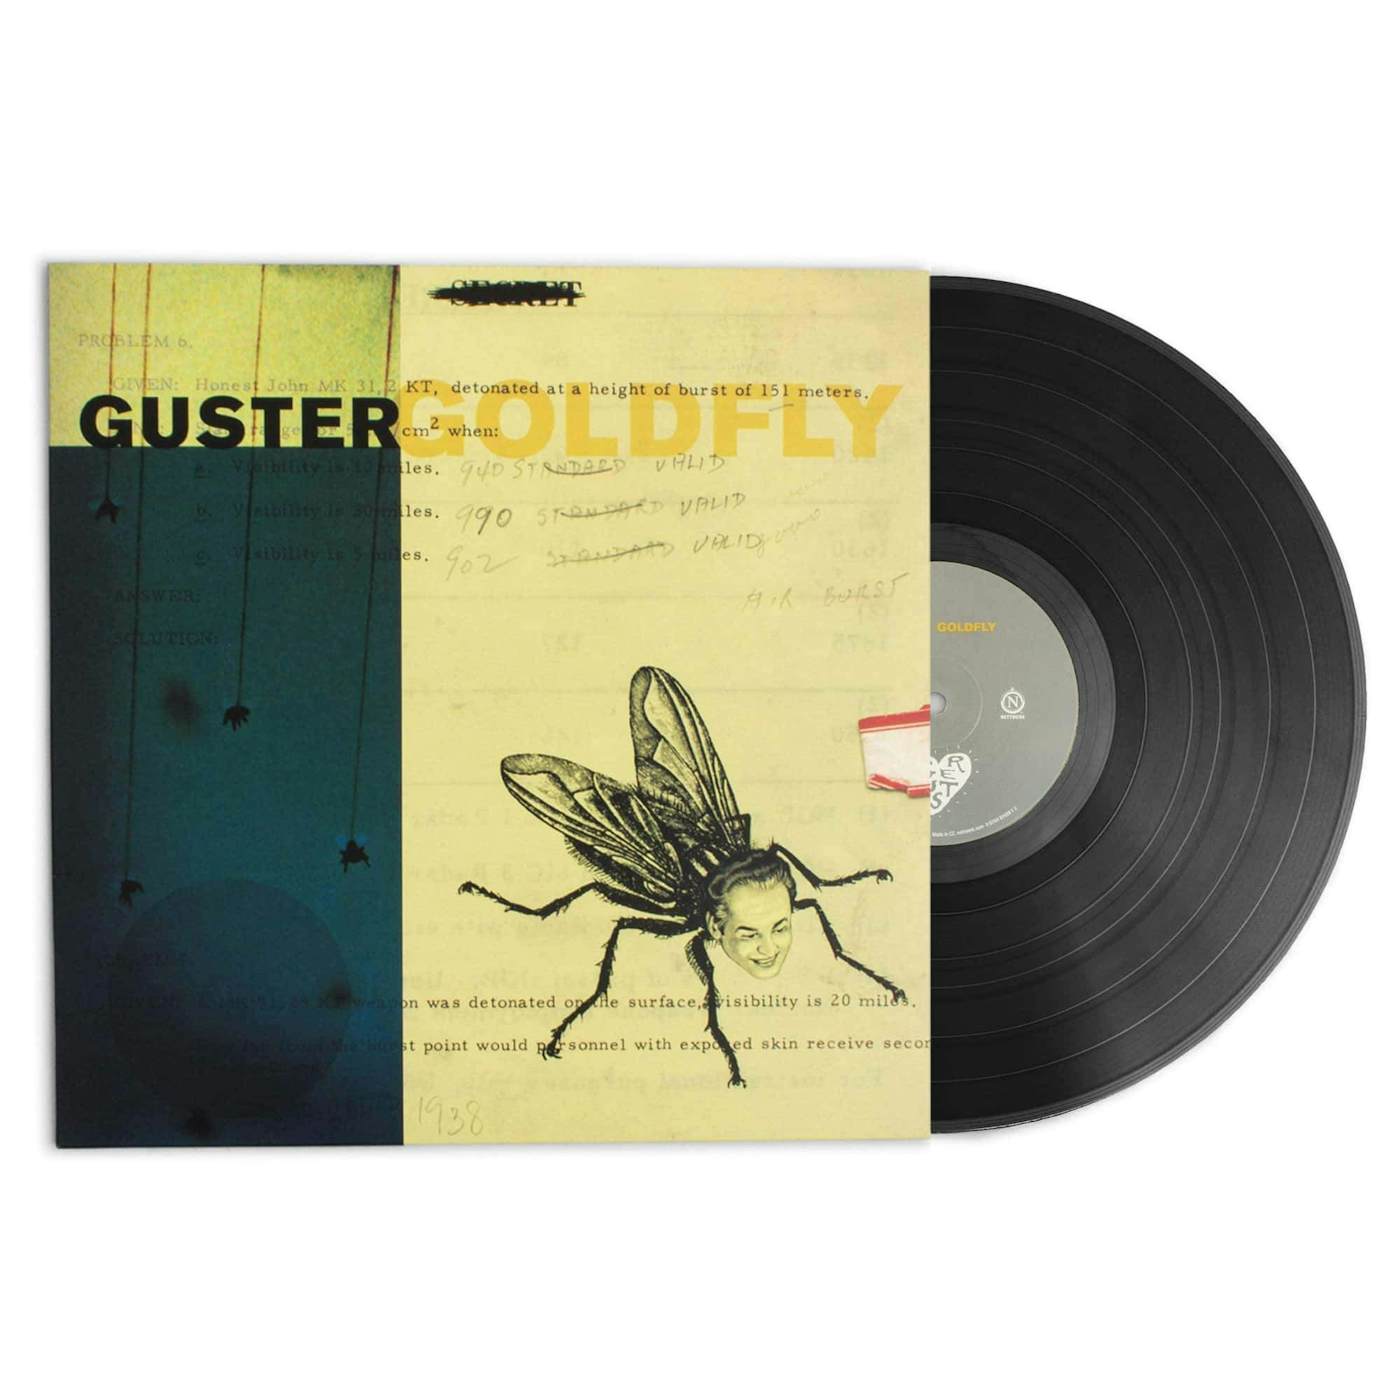 Guster 'Goldfly' 12" Standard Vinyl LP